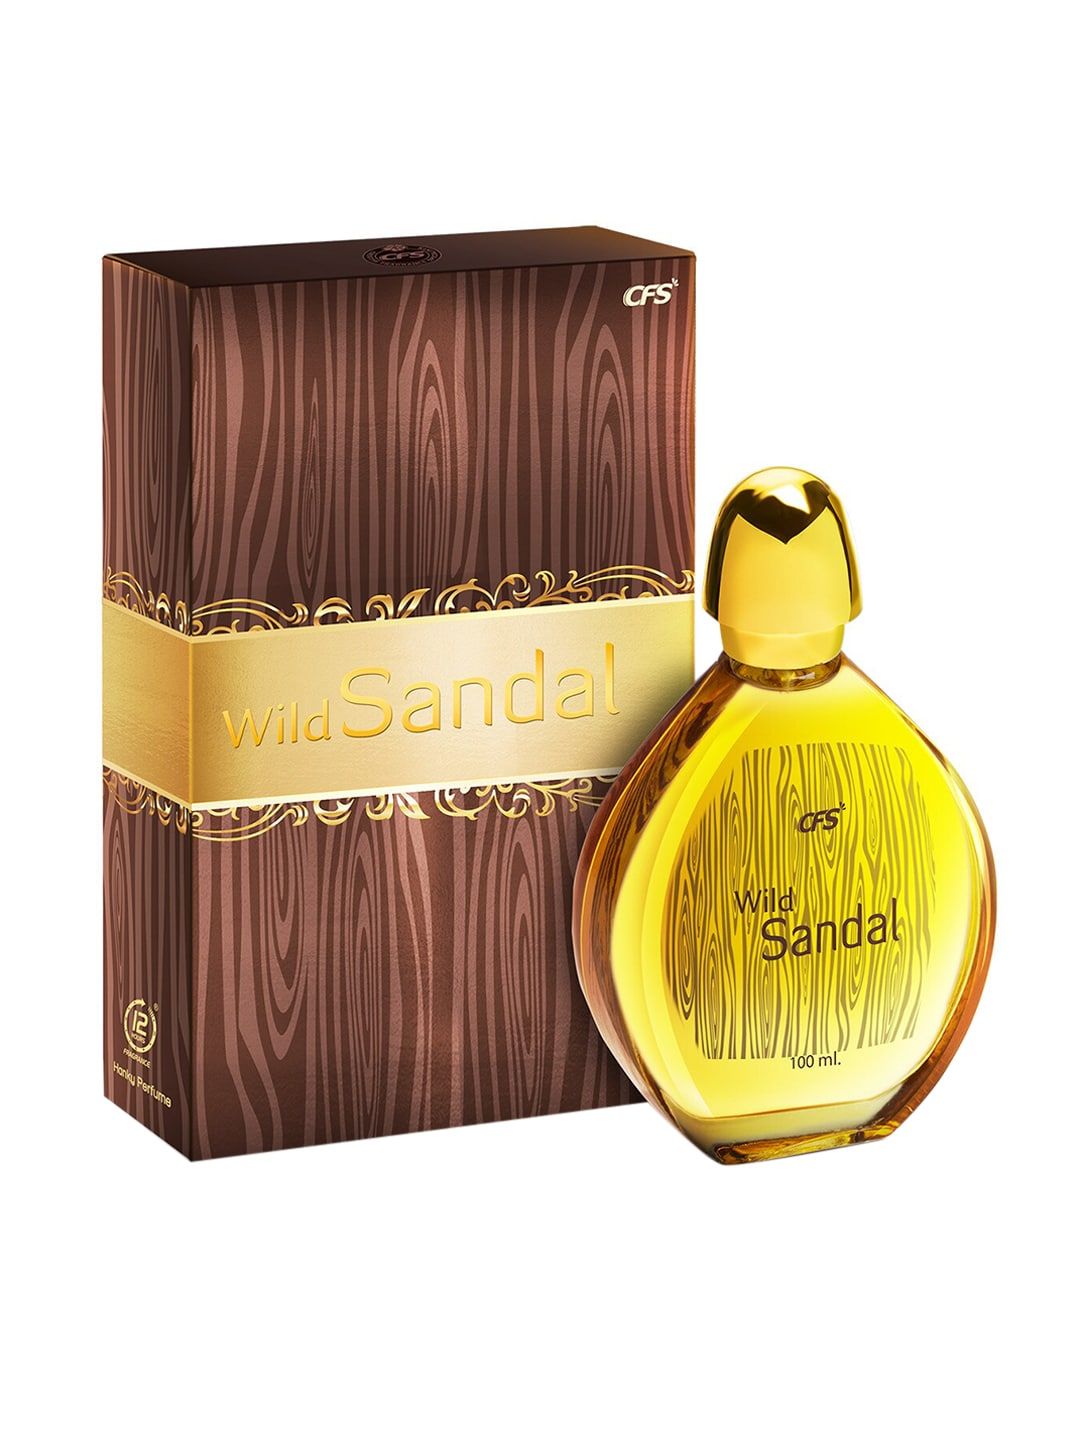 CFS Unisex Wild Sandal Perfume 100ml Price in India